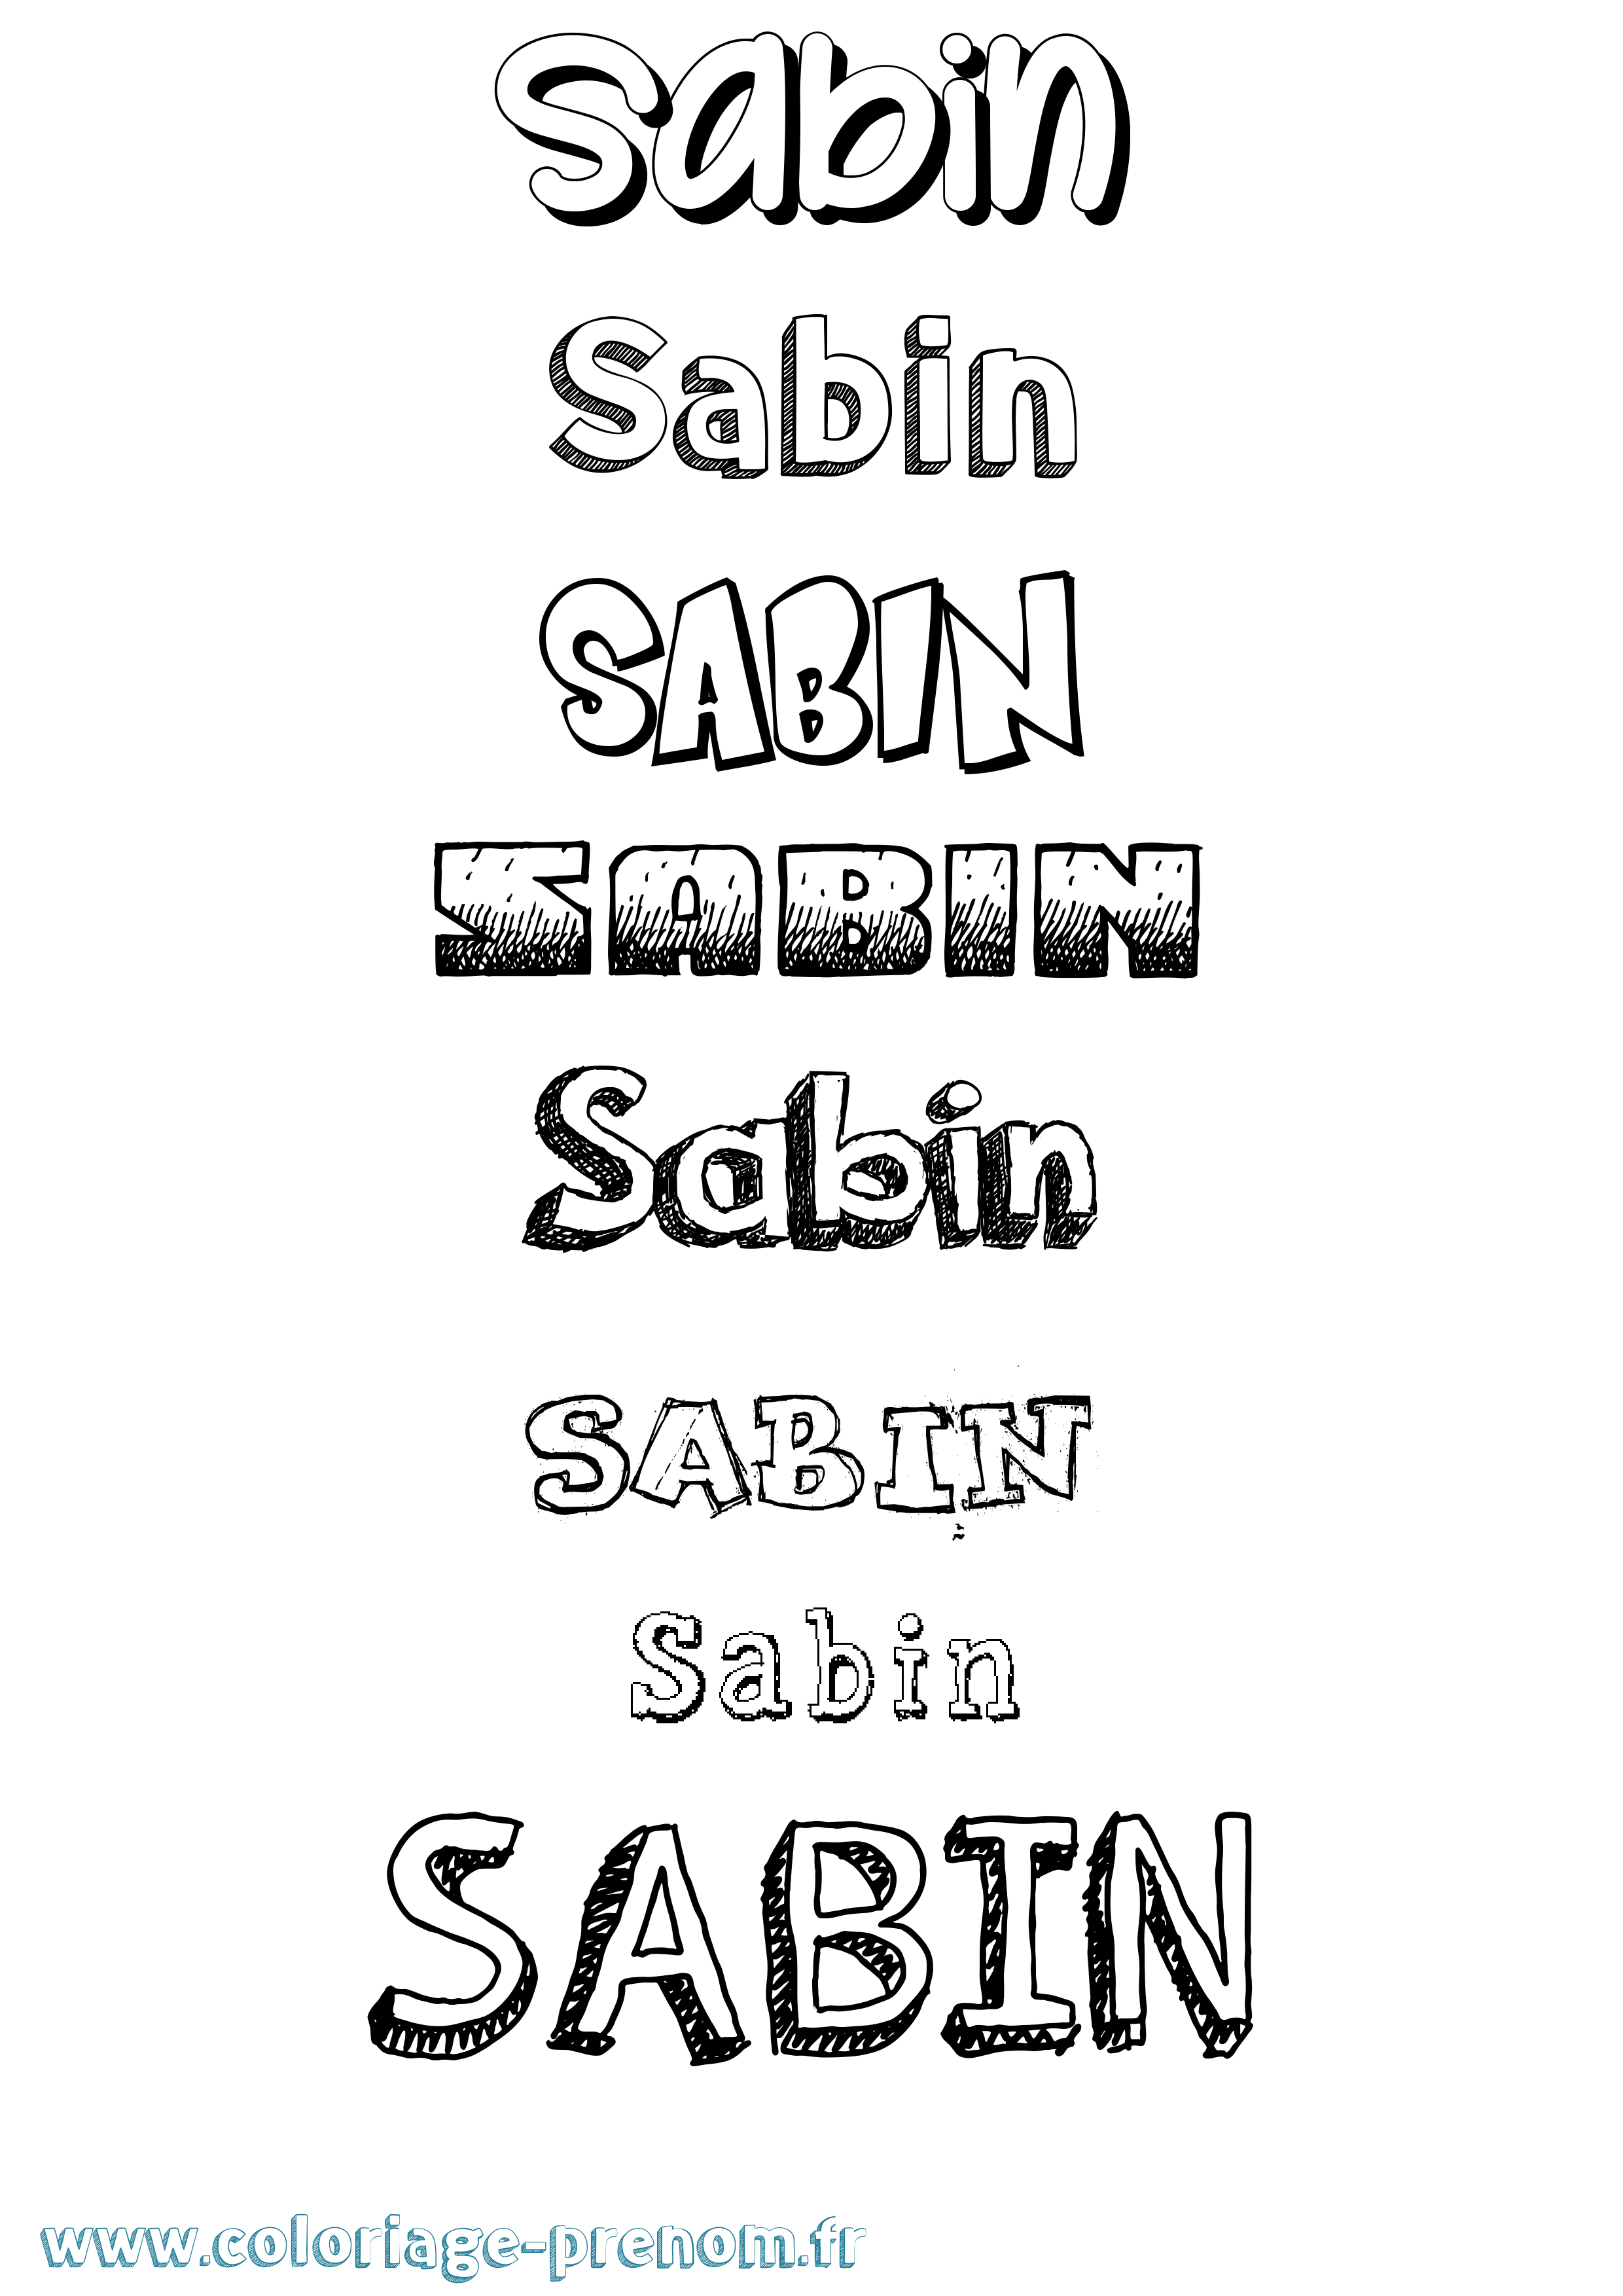 Coloriage prénom Sabin Dessiné